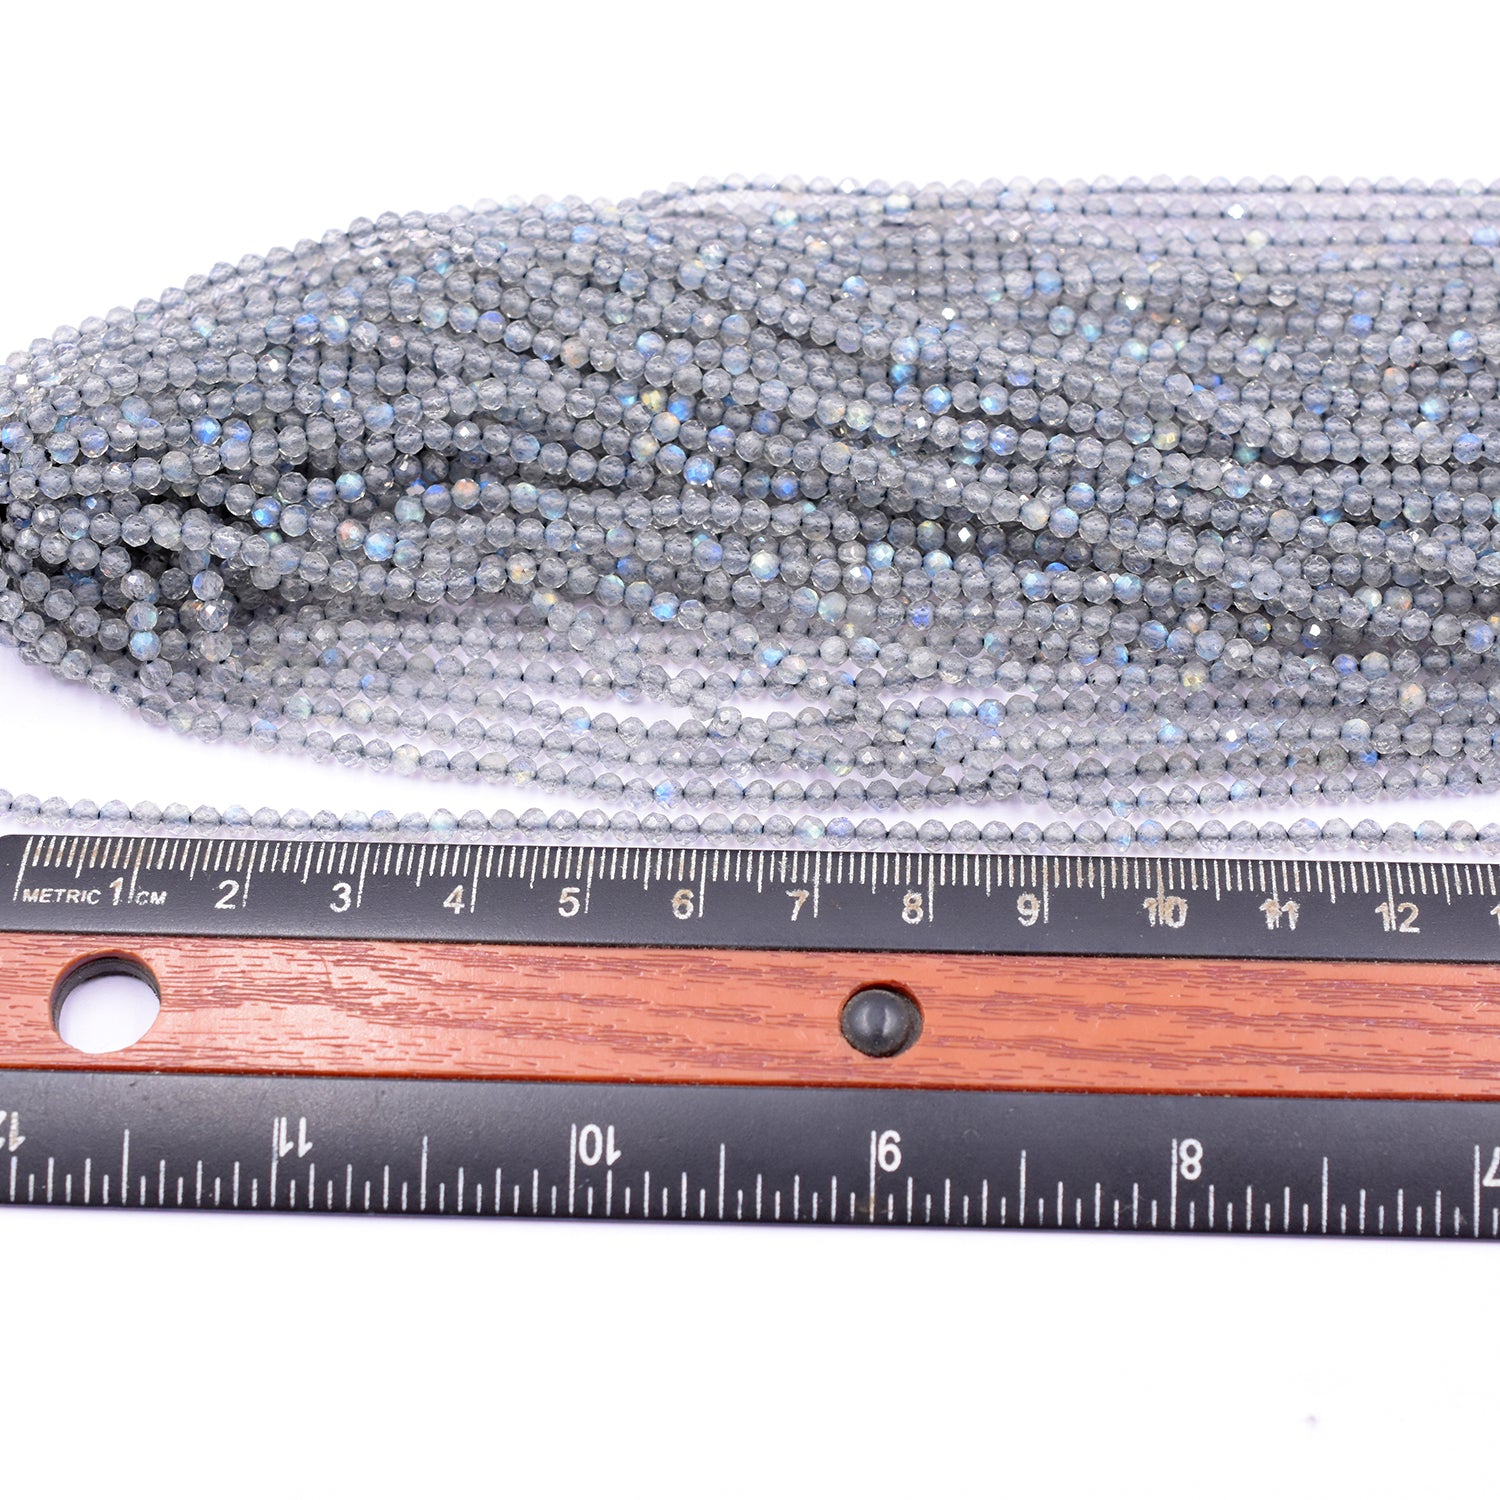 Labradorite 2 To 3 MM Faceted Rondelle Shape Beads Strand - Jaipur Gem Factory